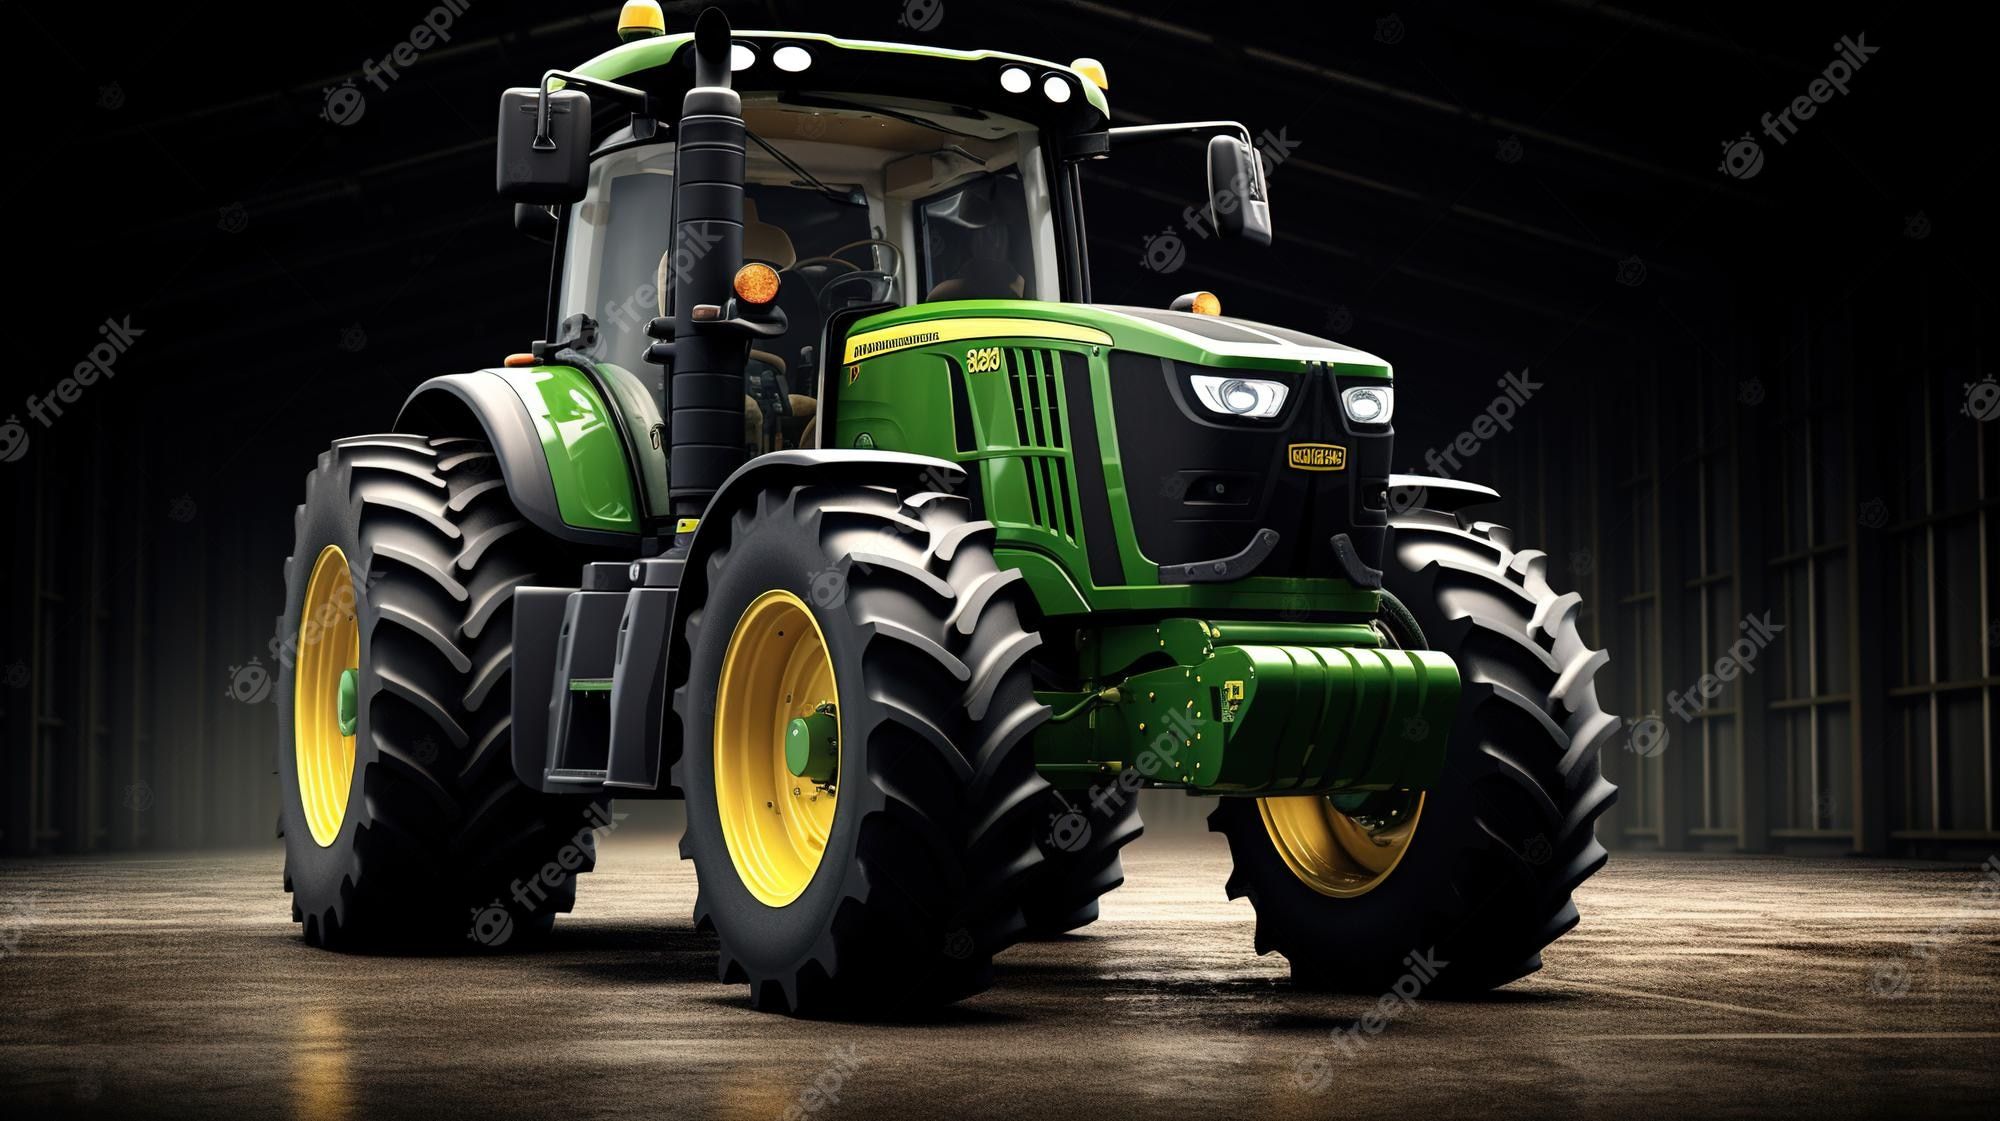  Traktor Hintergrundbild 2000x1121. Fotos, Über 300 hochqualitative kostenlose Stockfotos